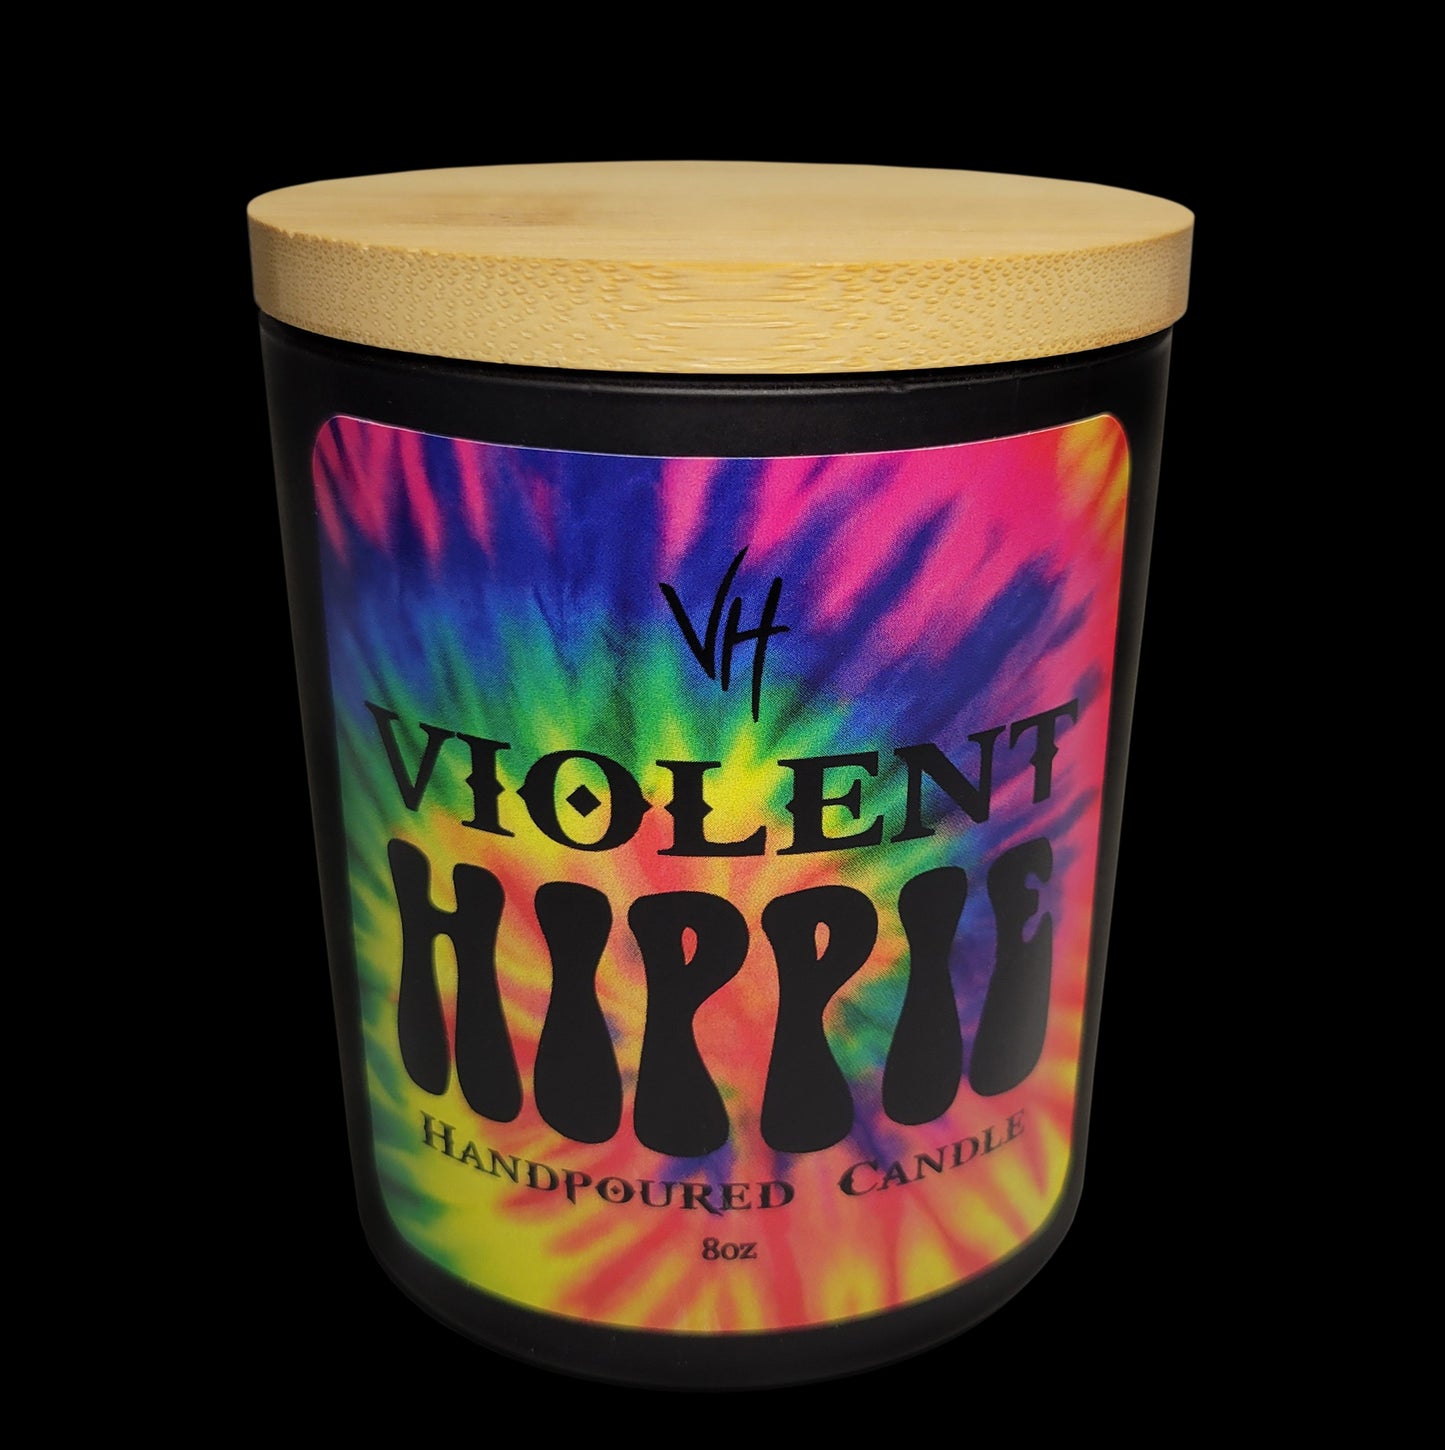 Violent Hippie™ Handmade Candle